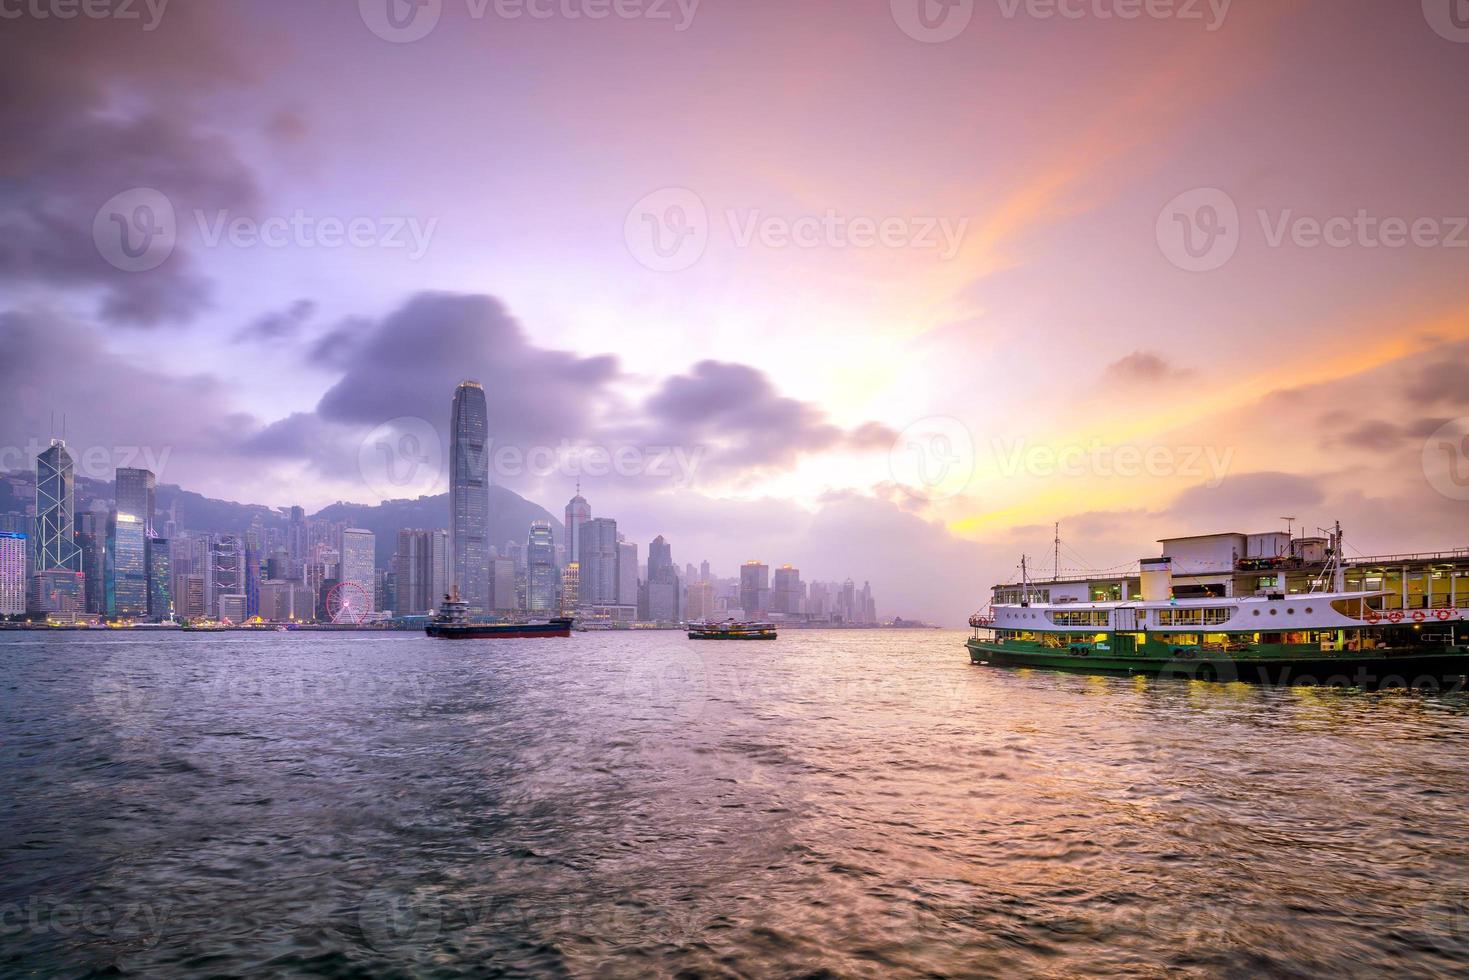 Hong Kong stadshorisont i Kina-panorama foto